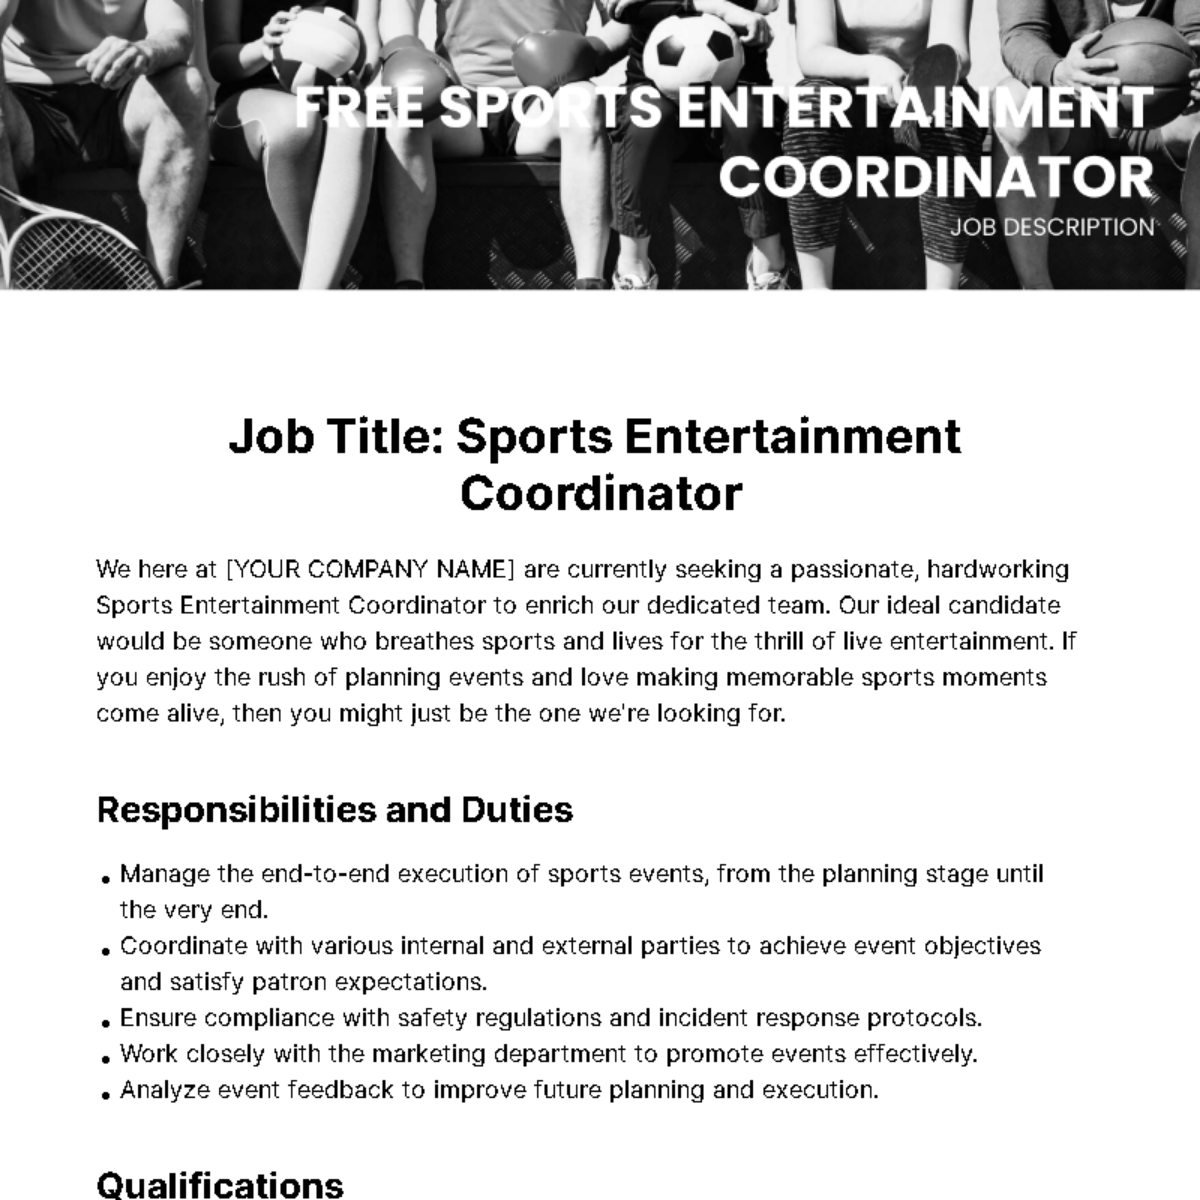 Free Sports Entertainment Coordinator Job Description Template